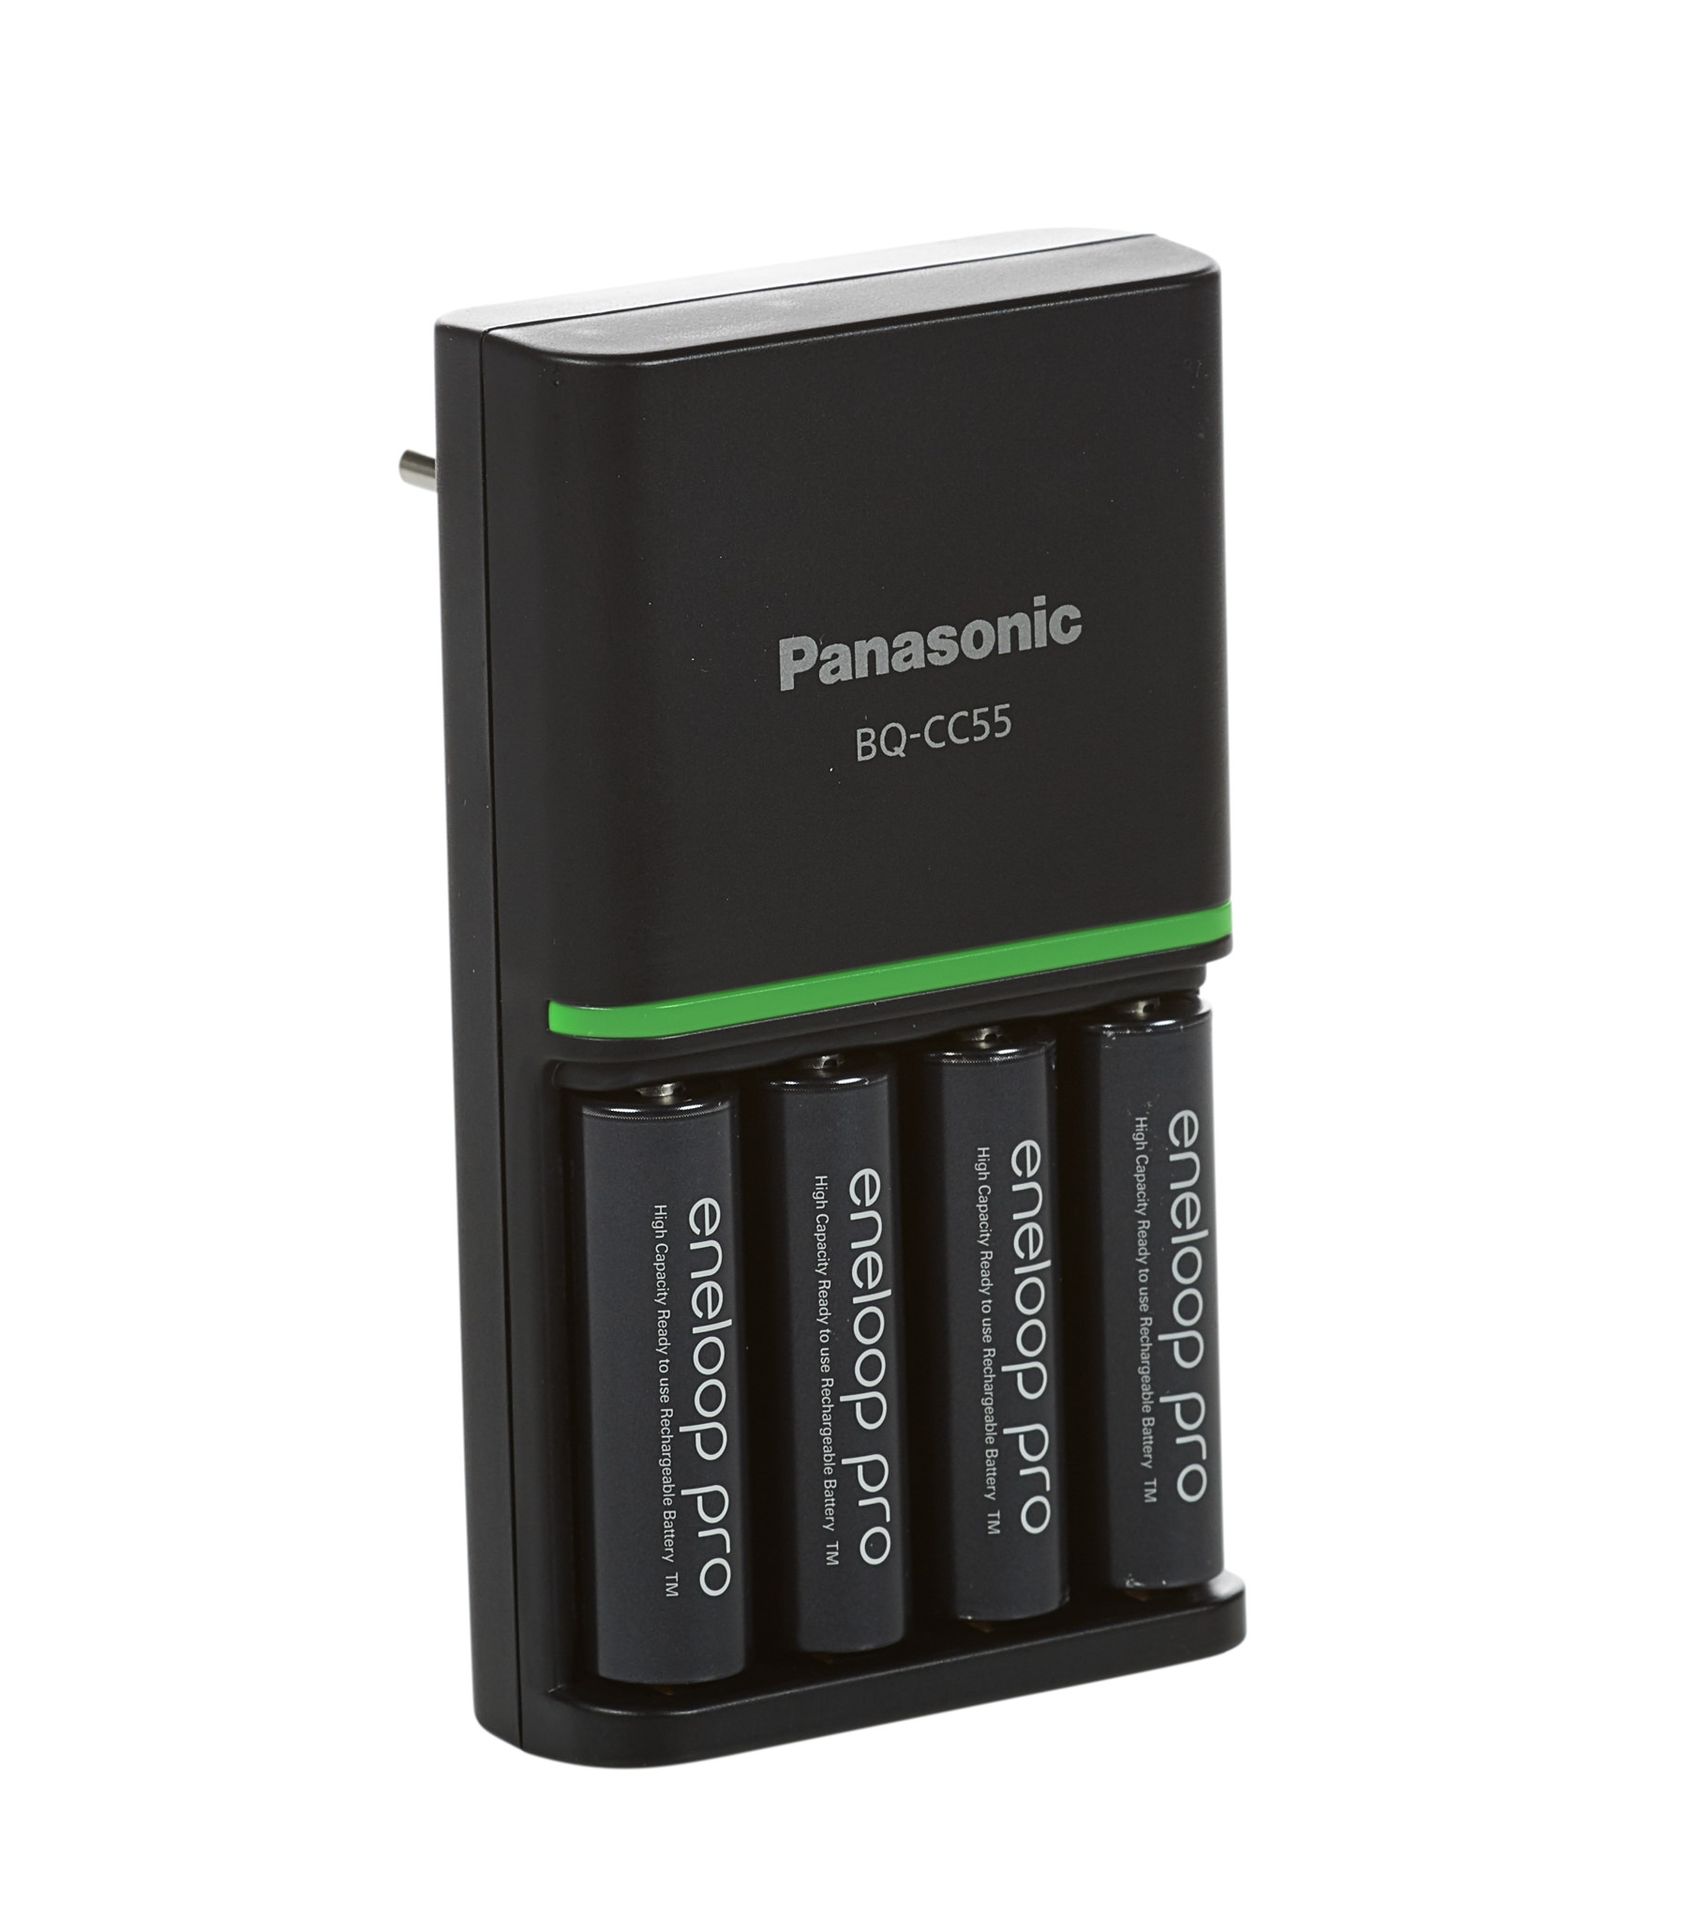 Panasonic BQ-CC55 packshots